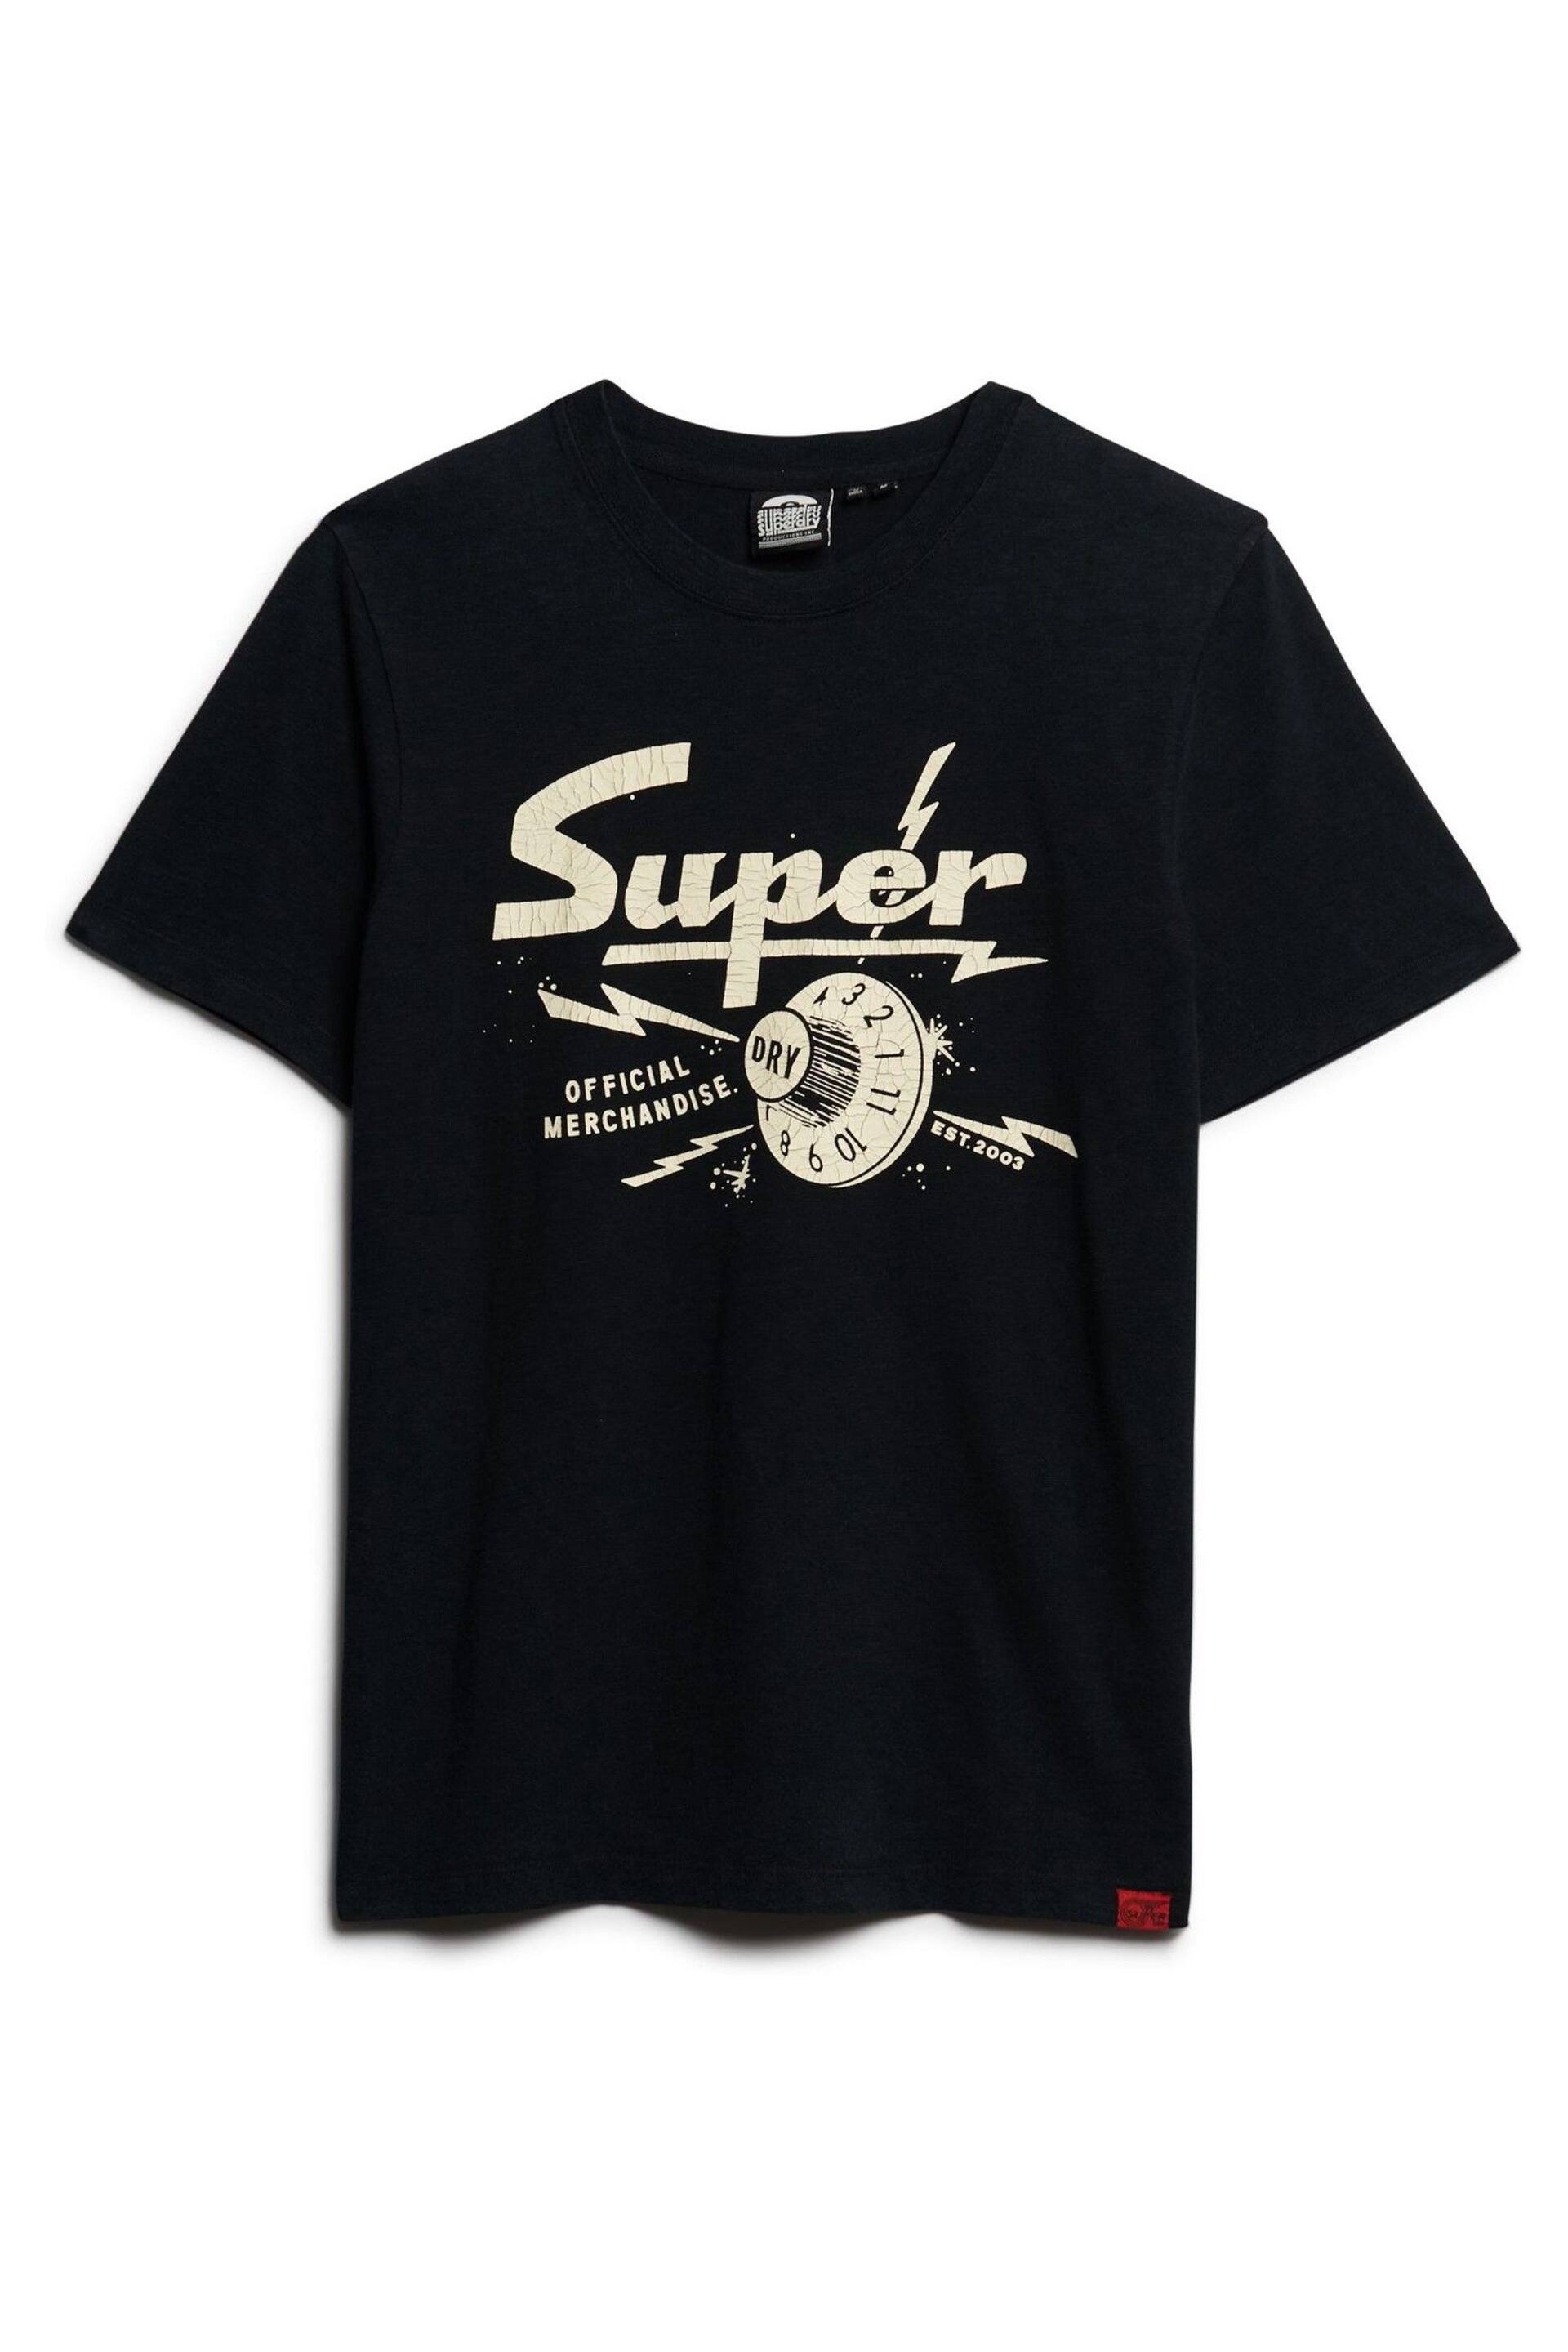 Superdry Black Retro Rocker Graphic T-Shirt - Image 4 of 6